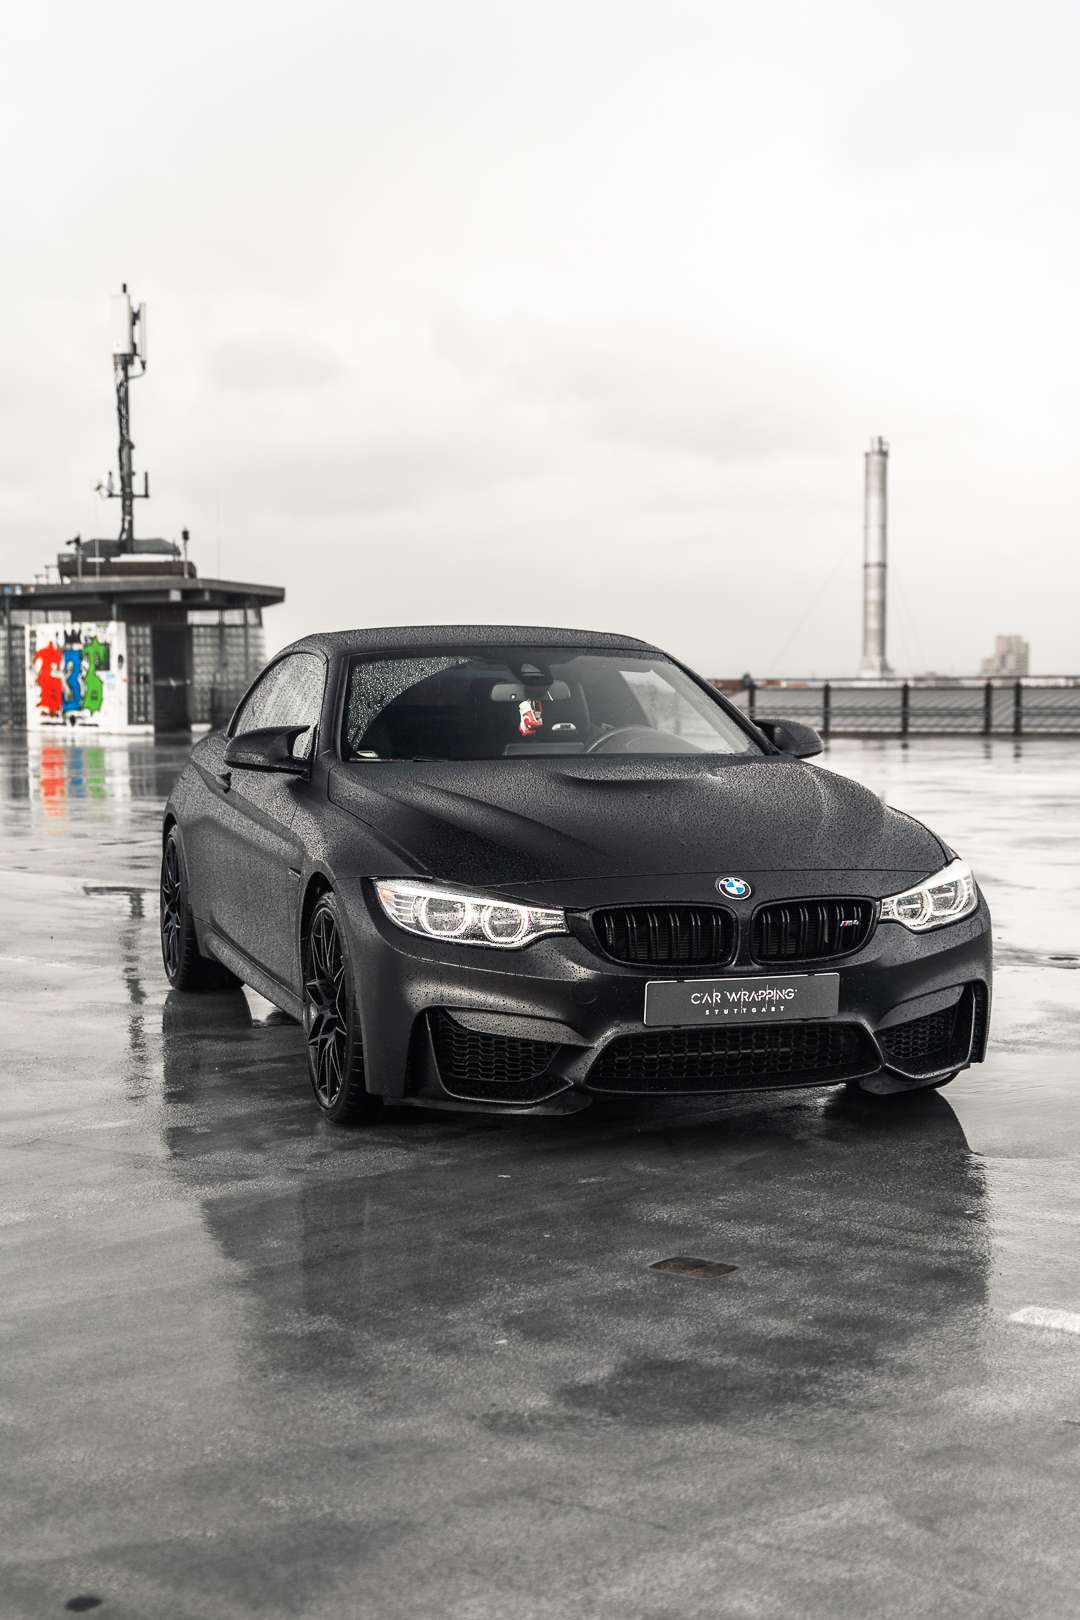 BMW - Car Wrapping